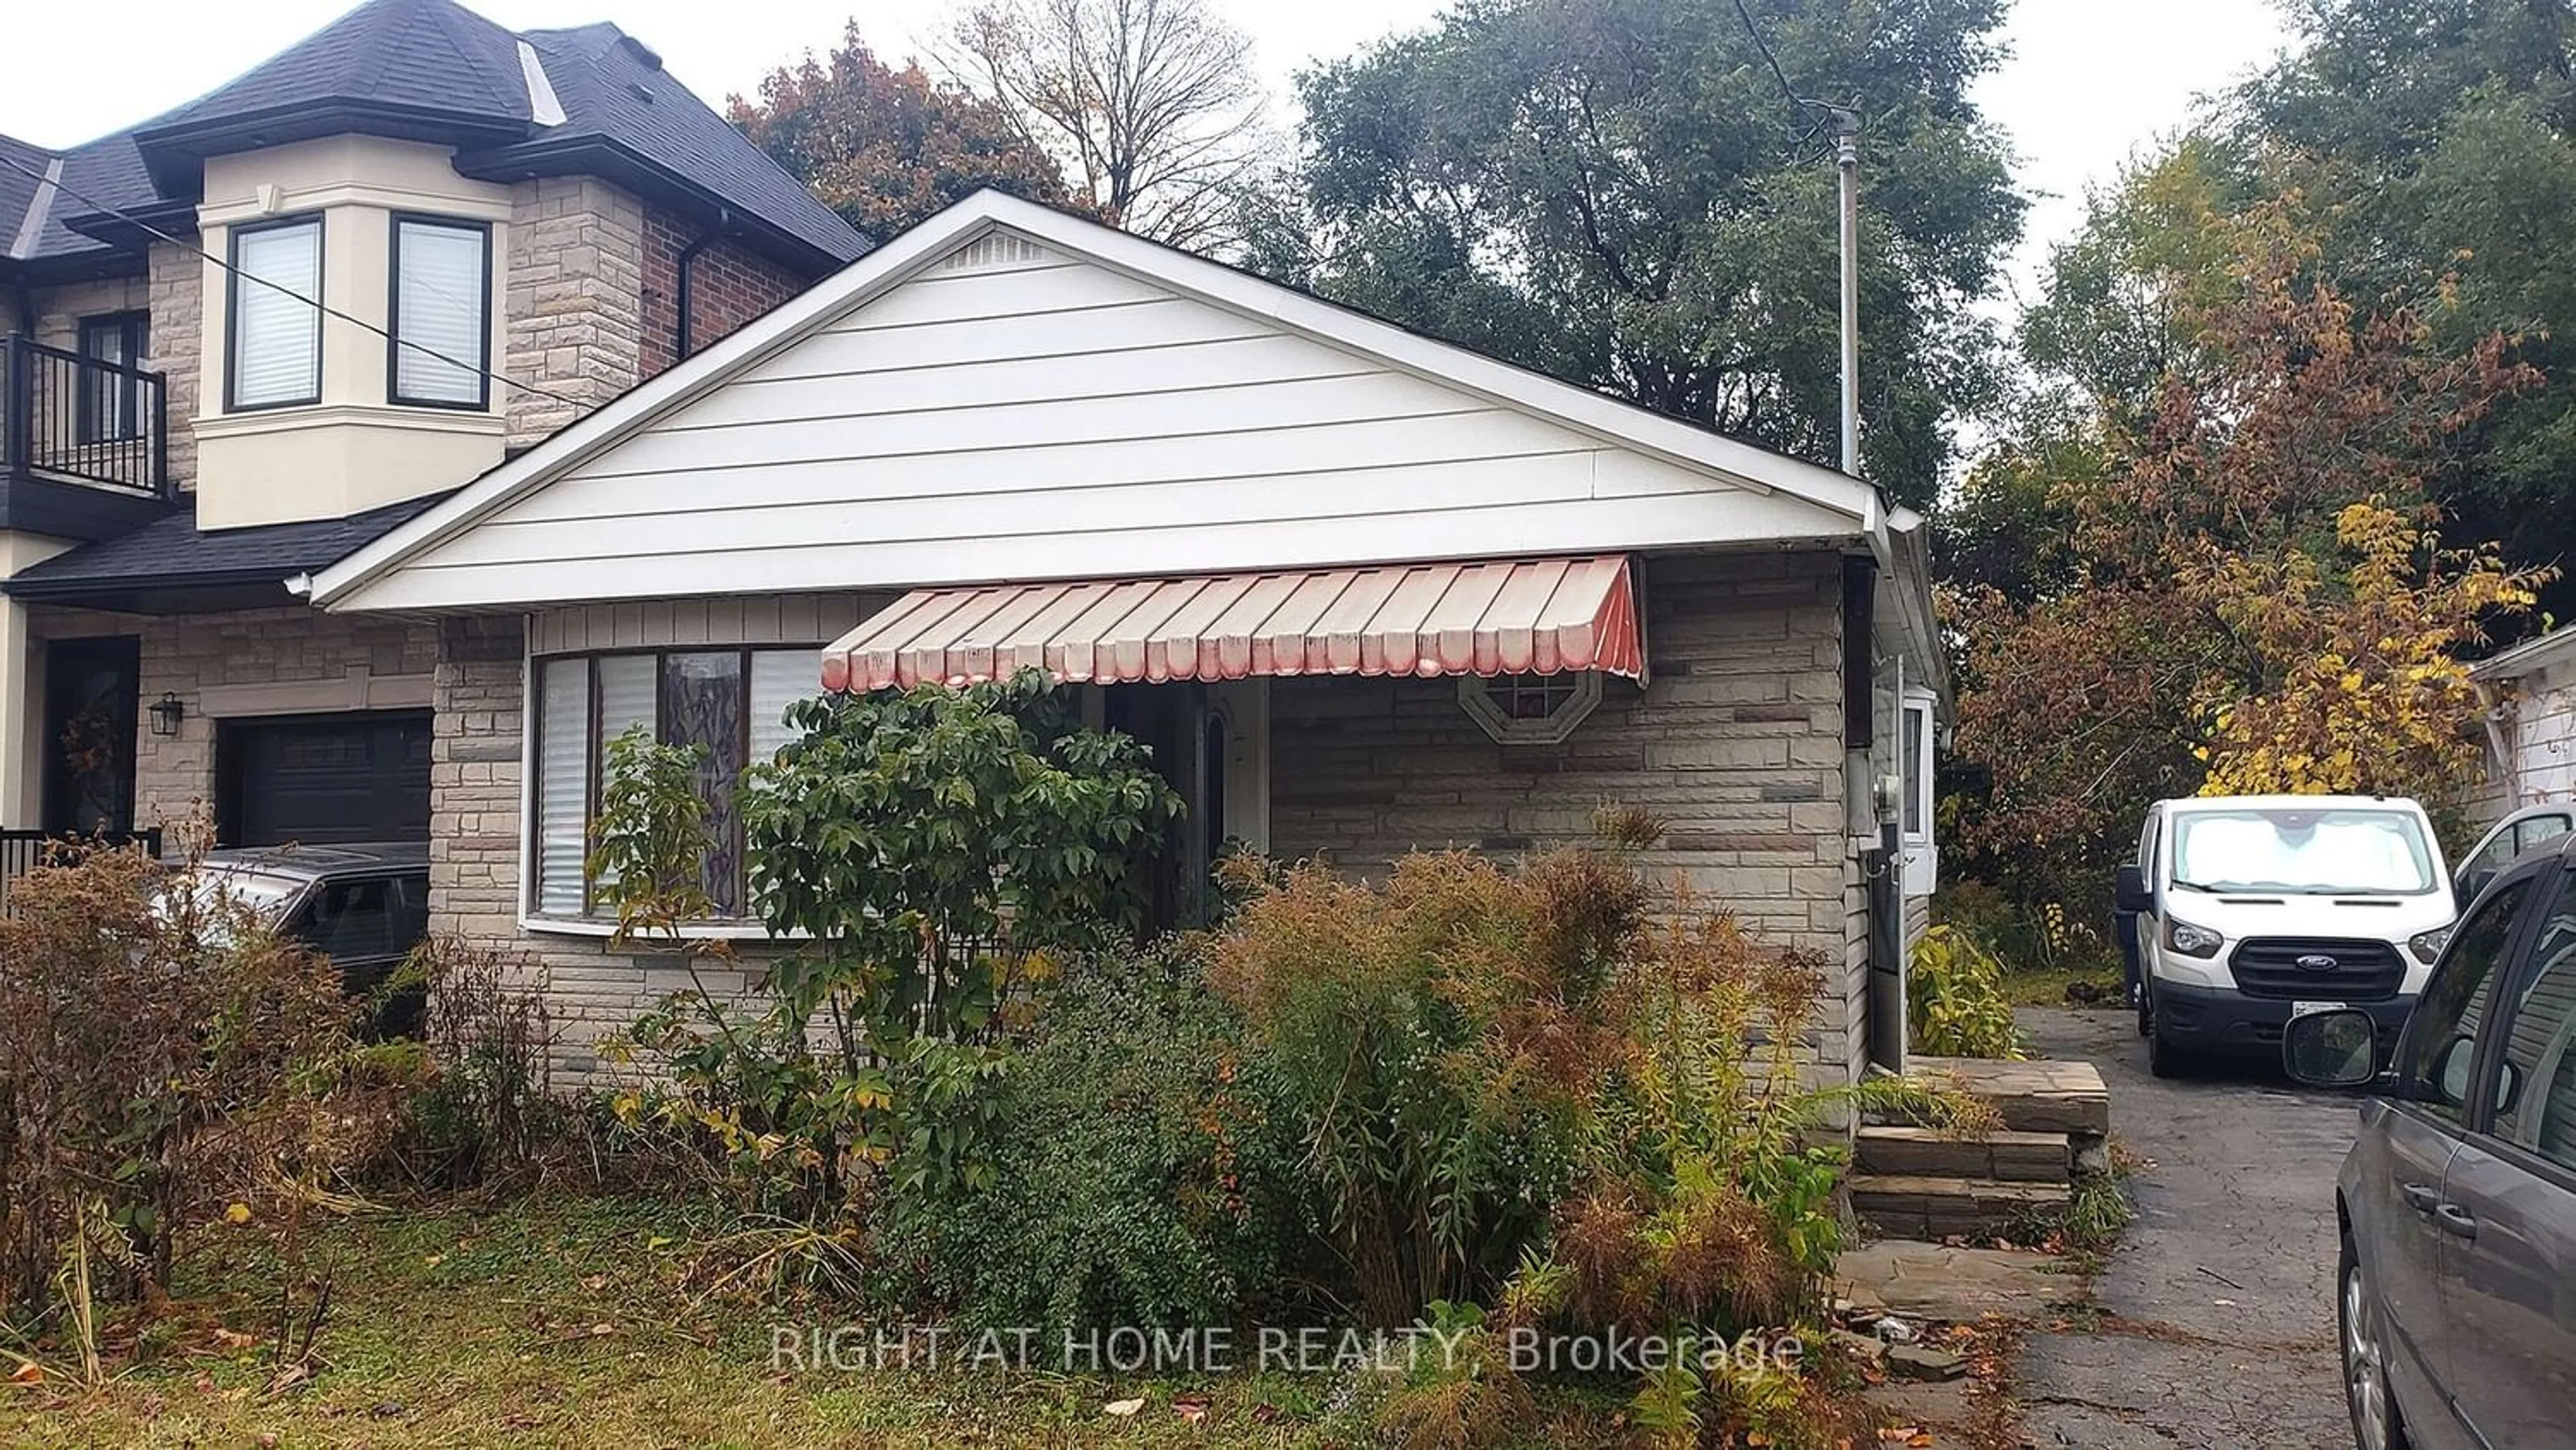 Home with brick exterior material for 897 Victoria Park Ave, Toronto Ontario M4B 2J2